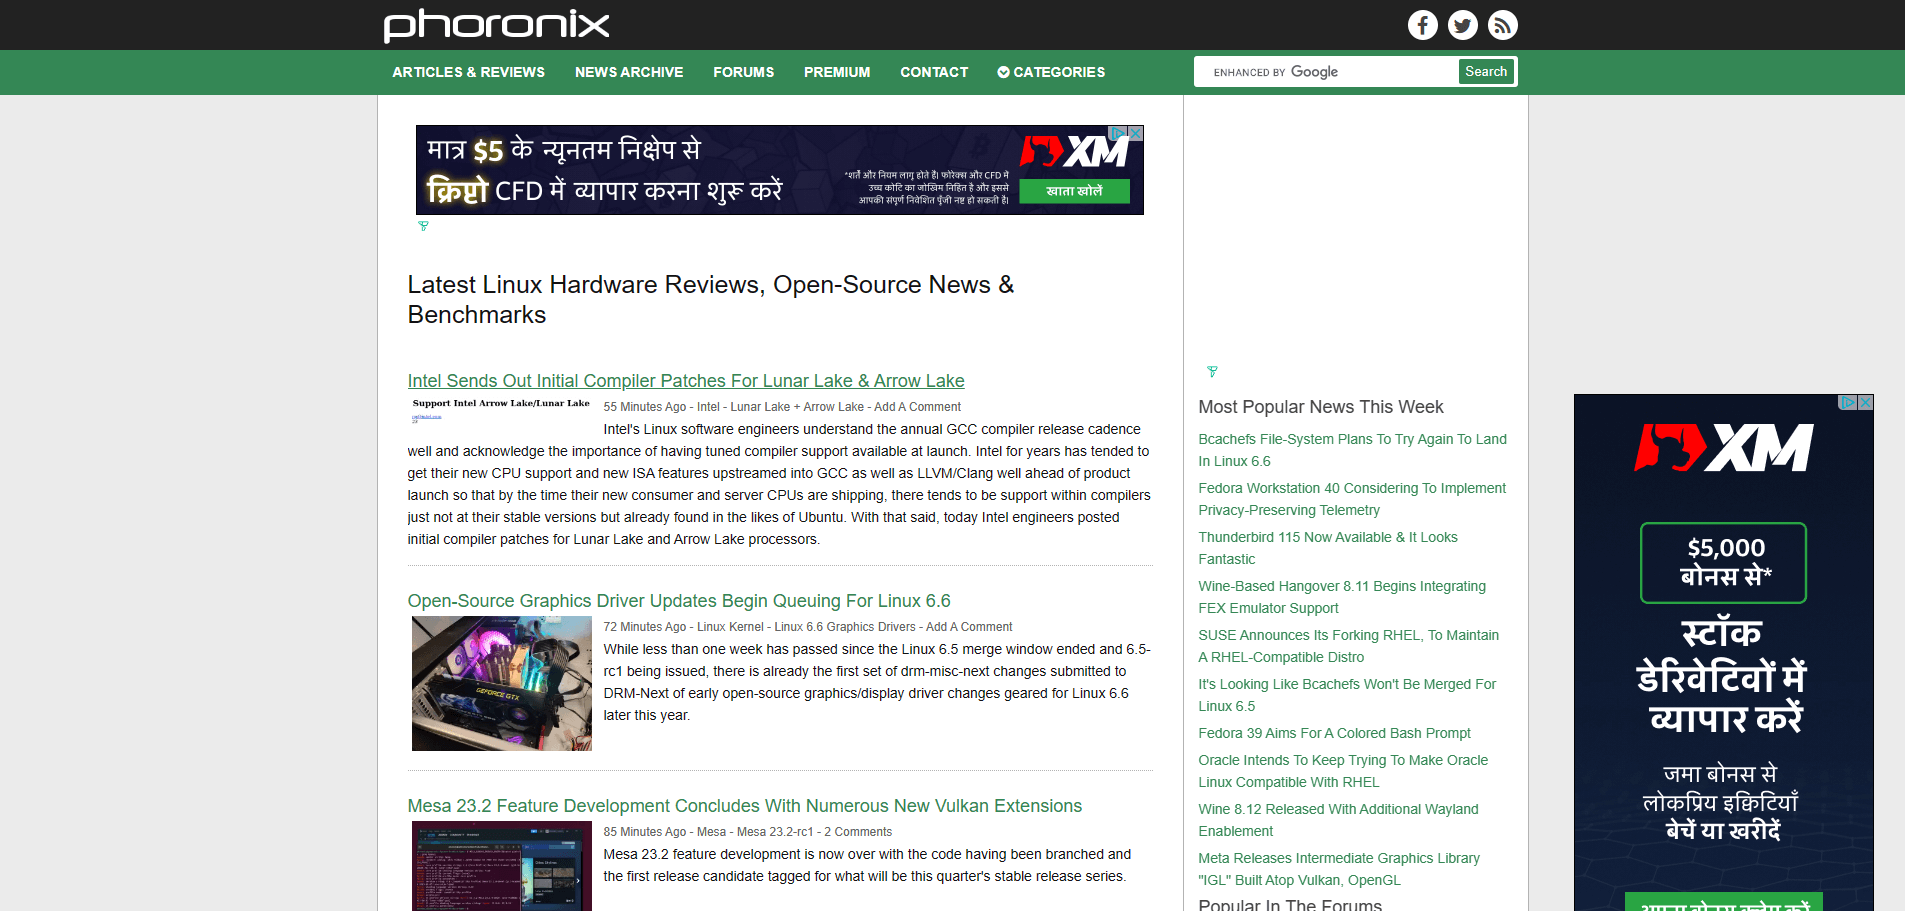 a screenshot of the phoronix homepage